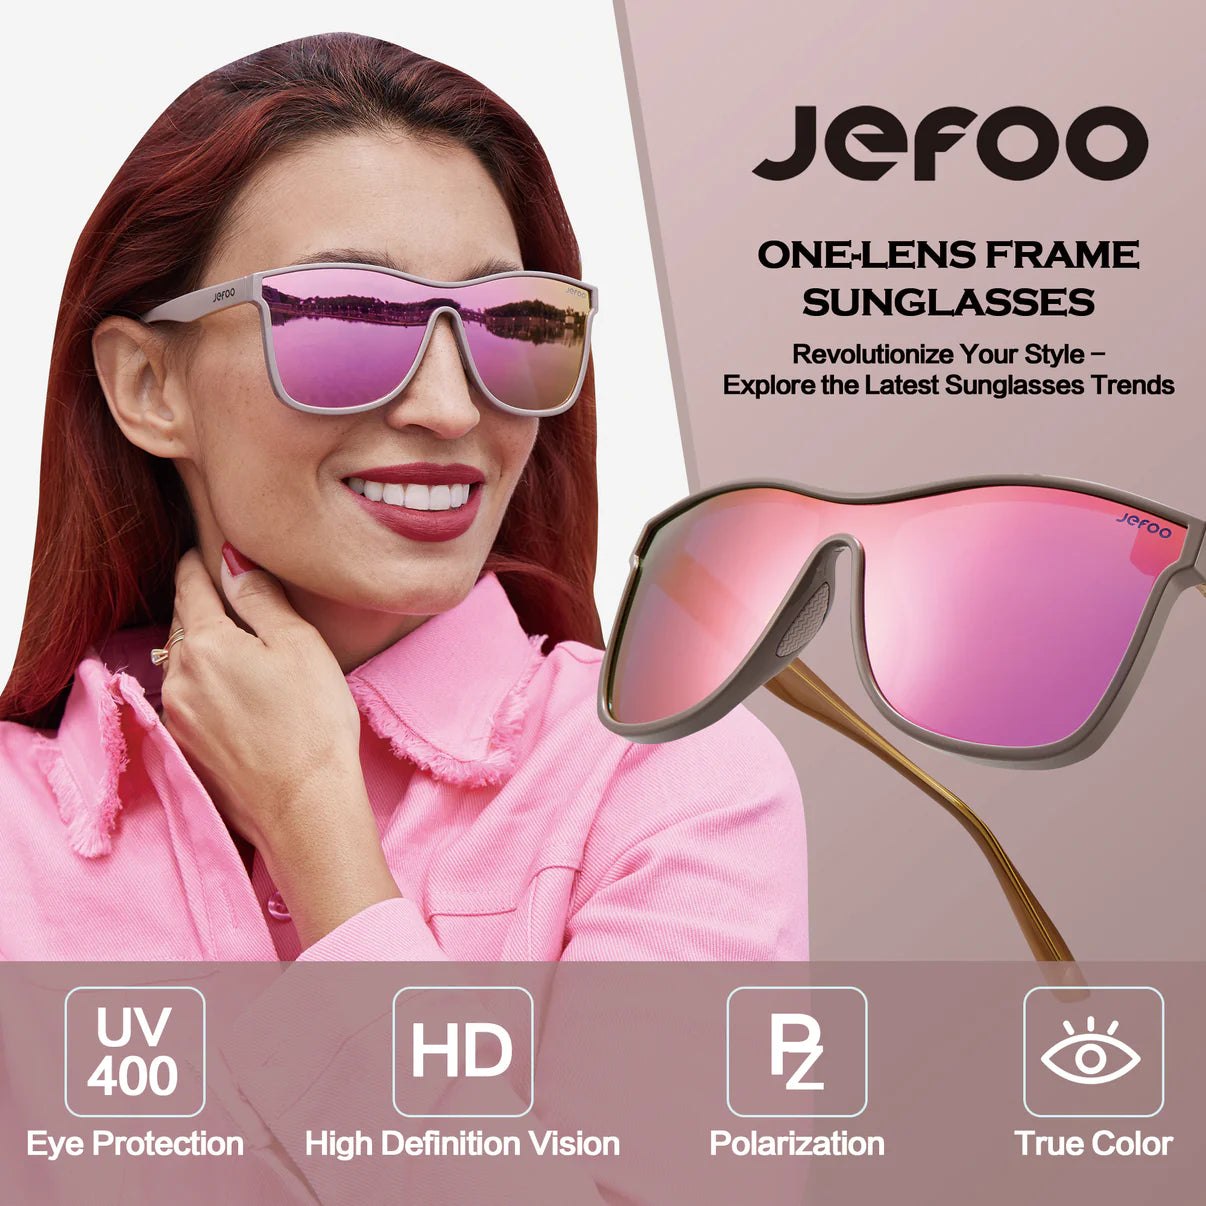 A-Beautiful-Woman-Wearing-Cute-One-Lens-Sunglasses-Aurora-Pink-JF189